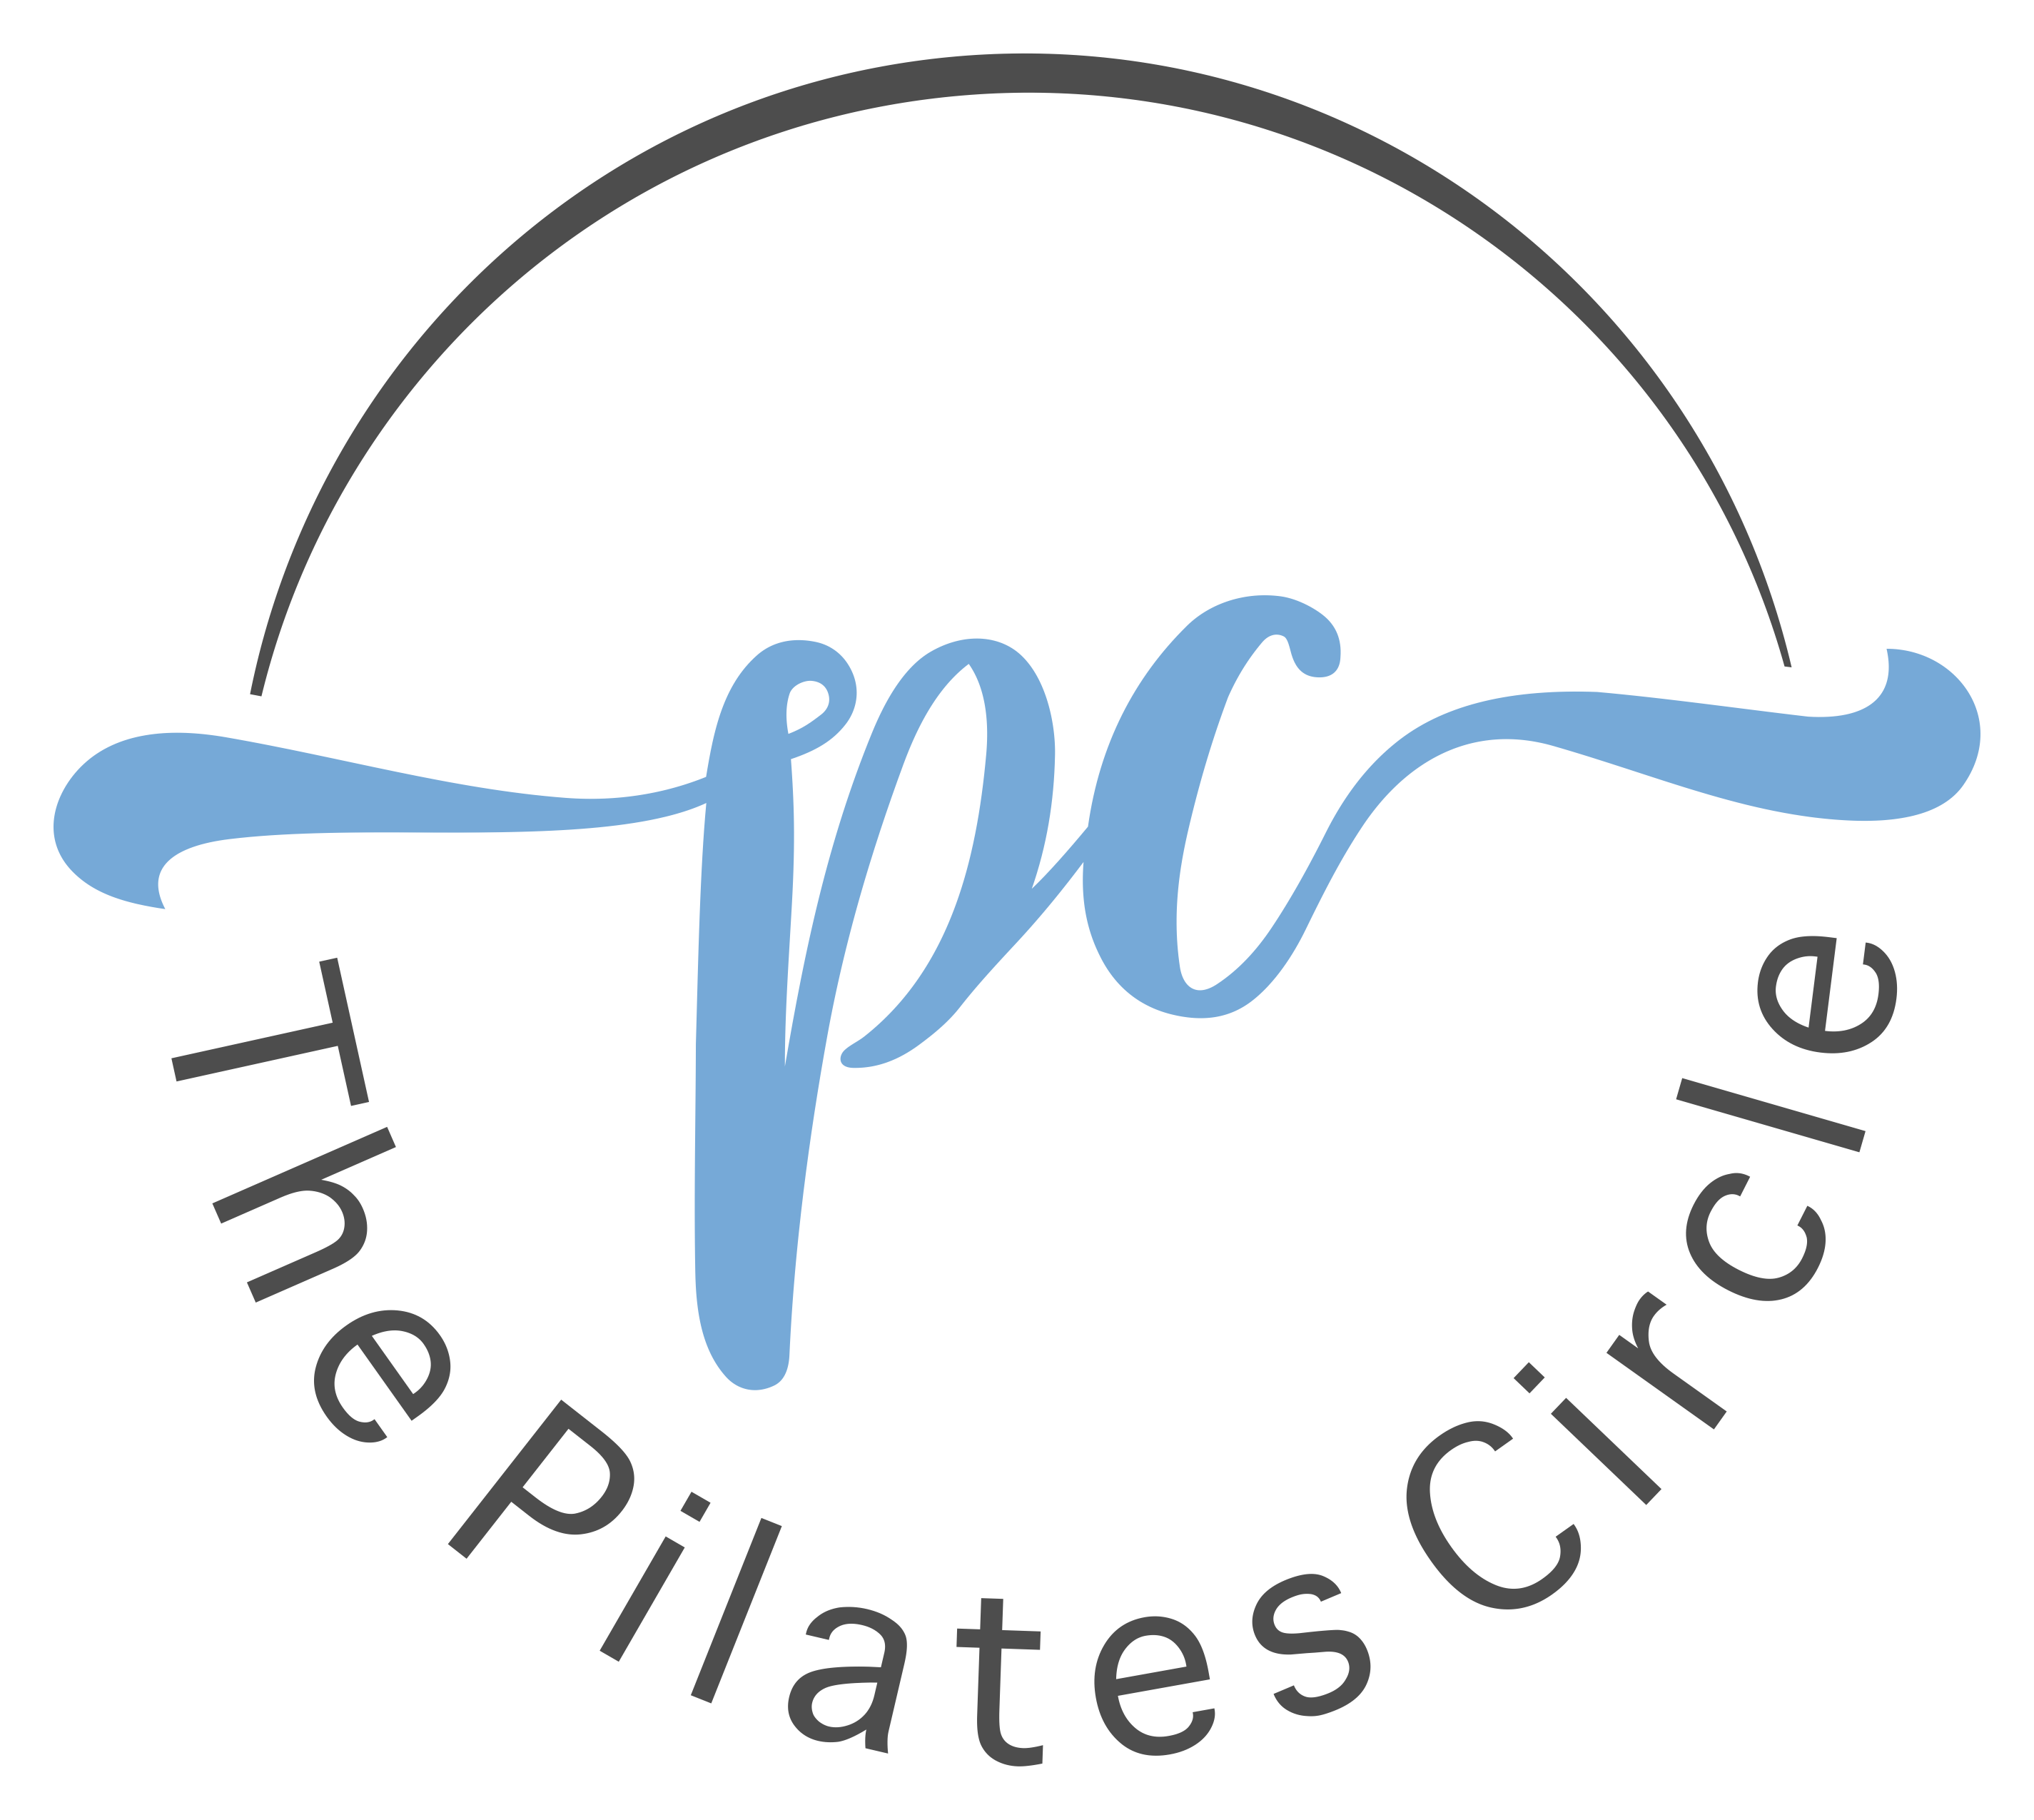 Pilates Circle